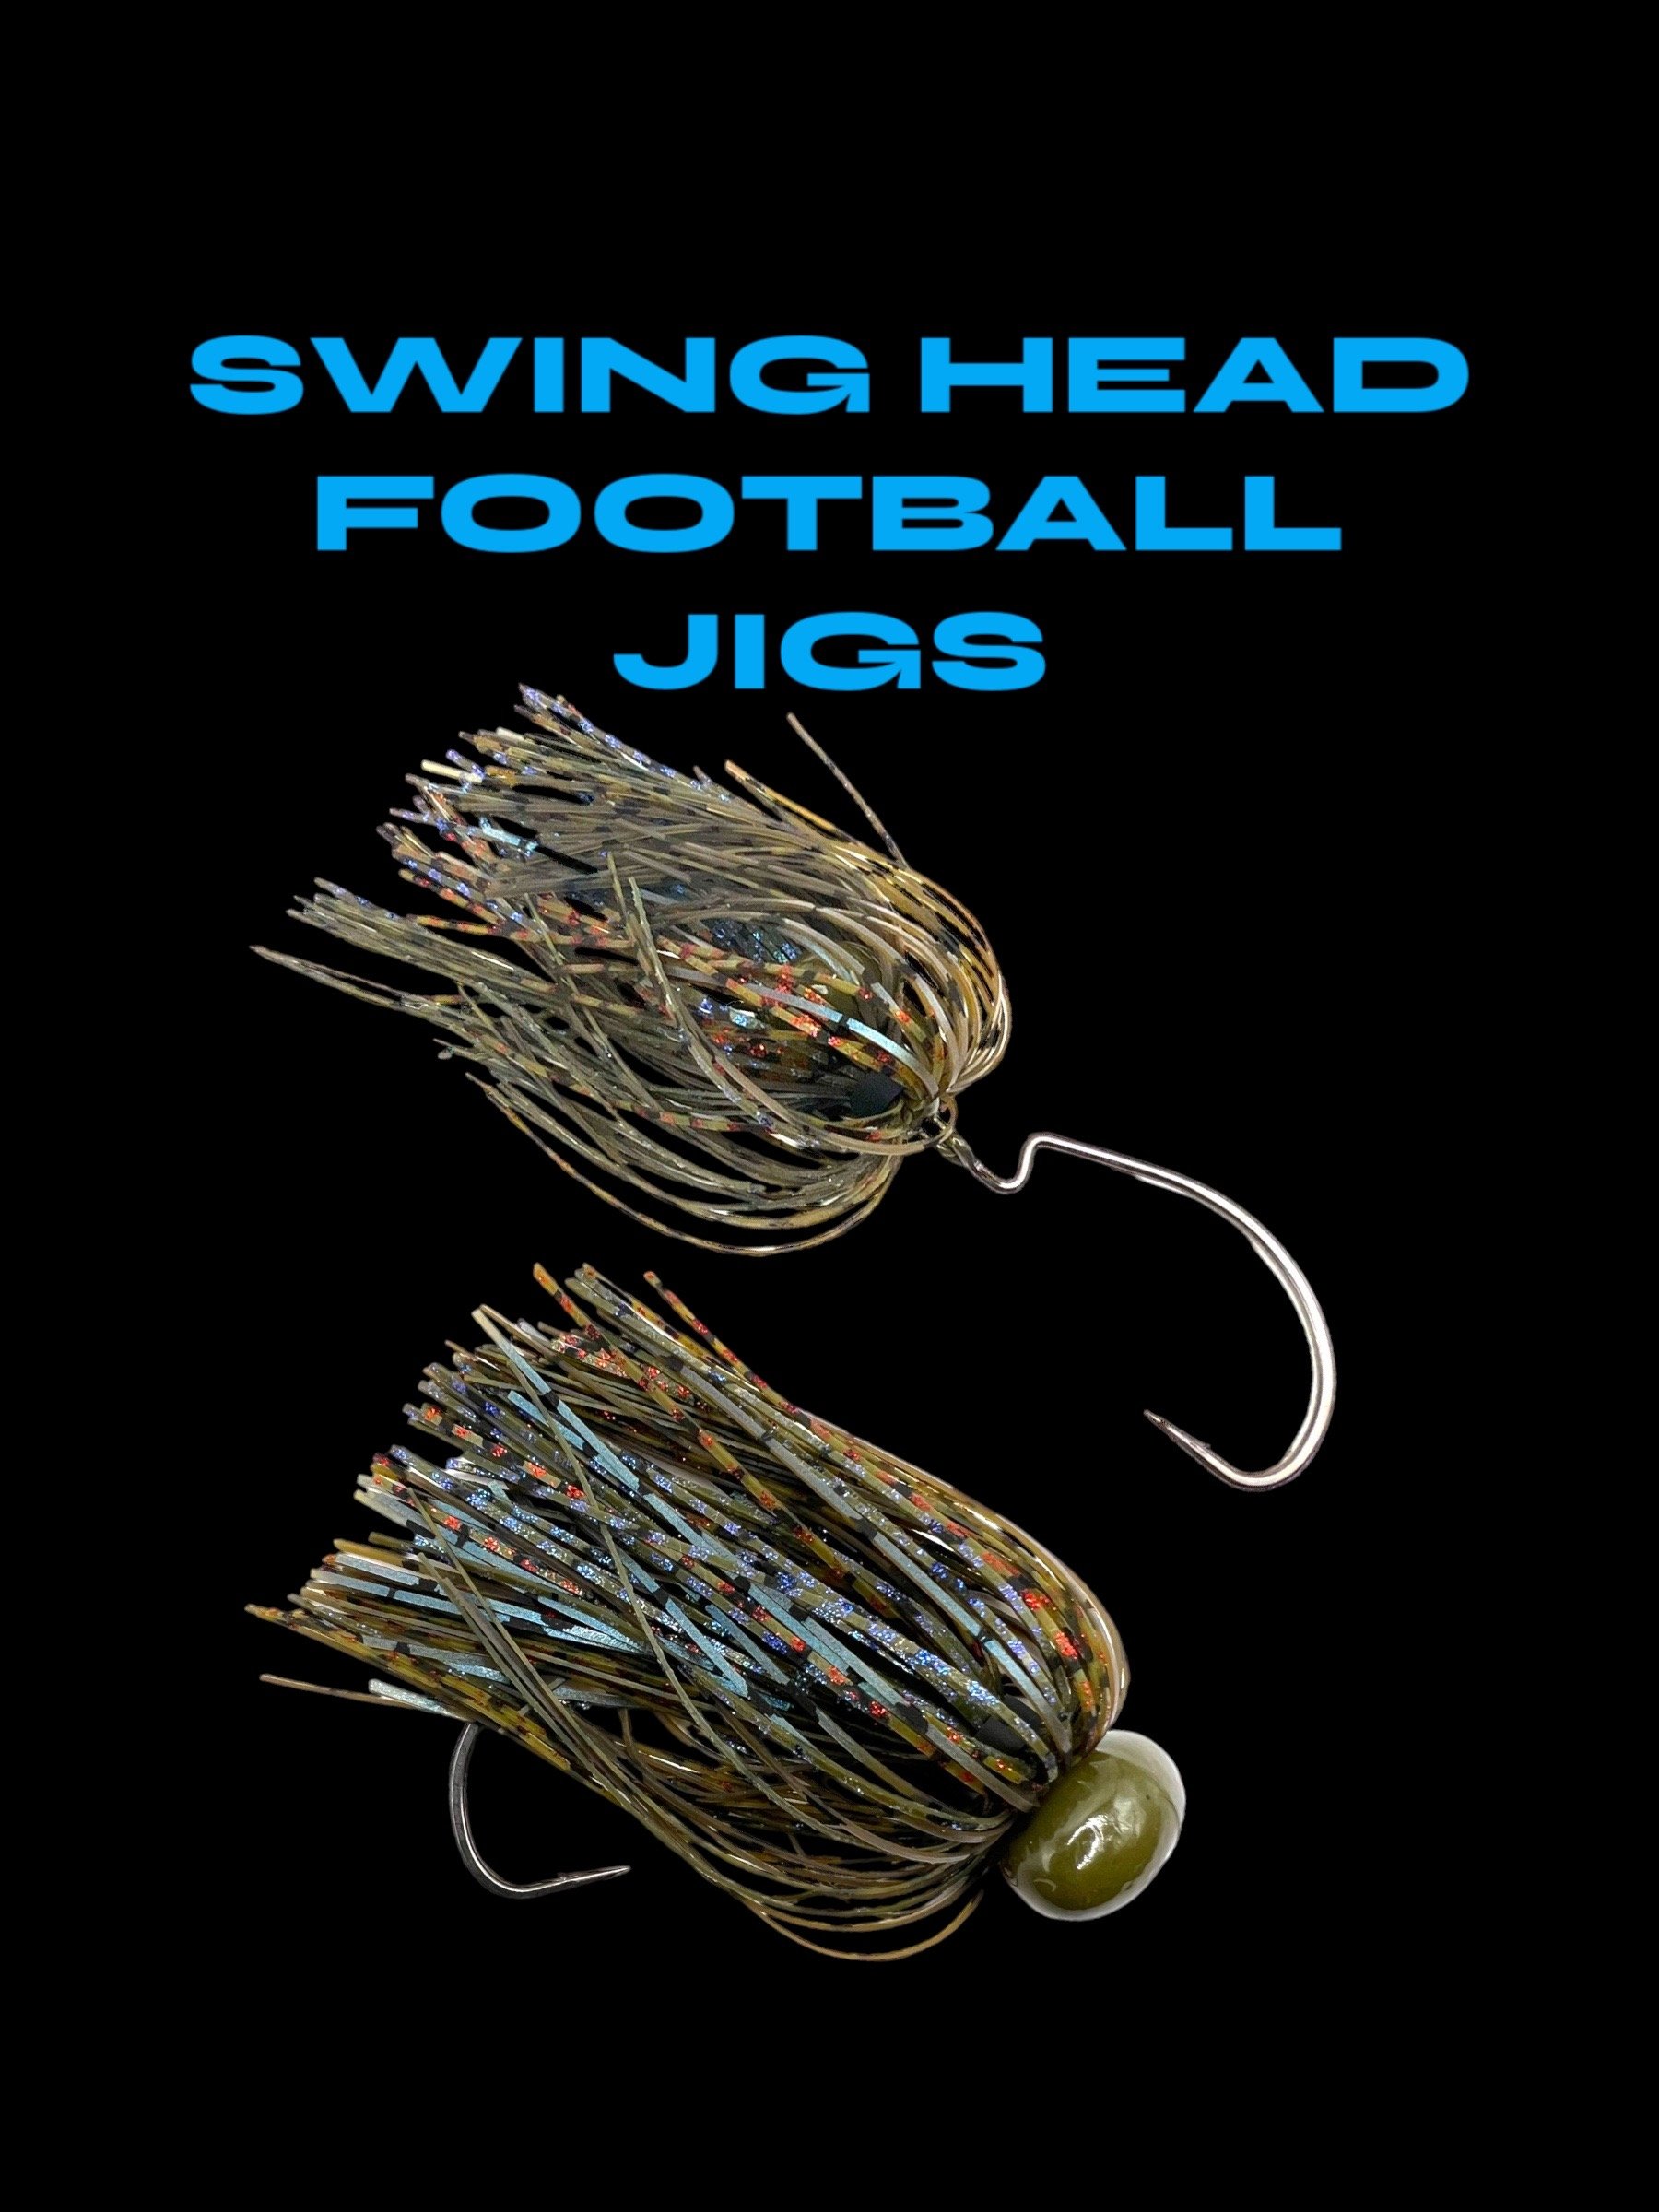 Tungsten Swing Football Jigs for bass fishing